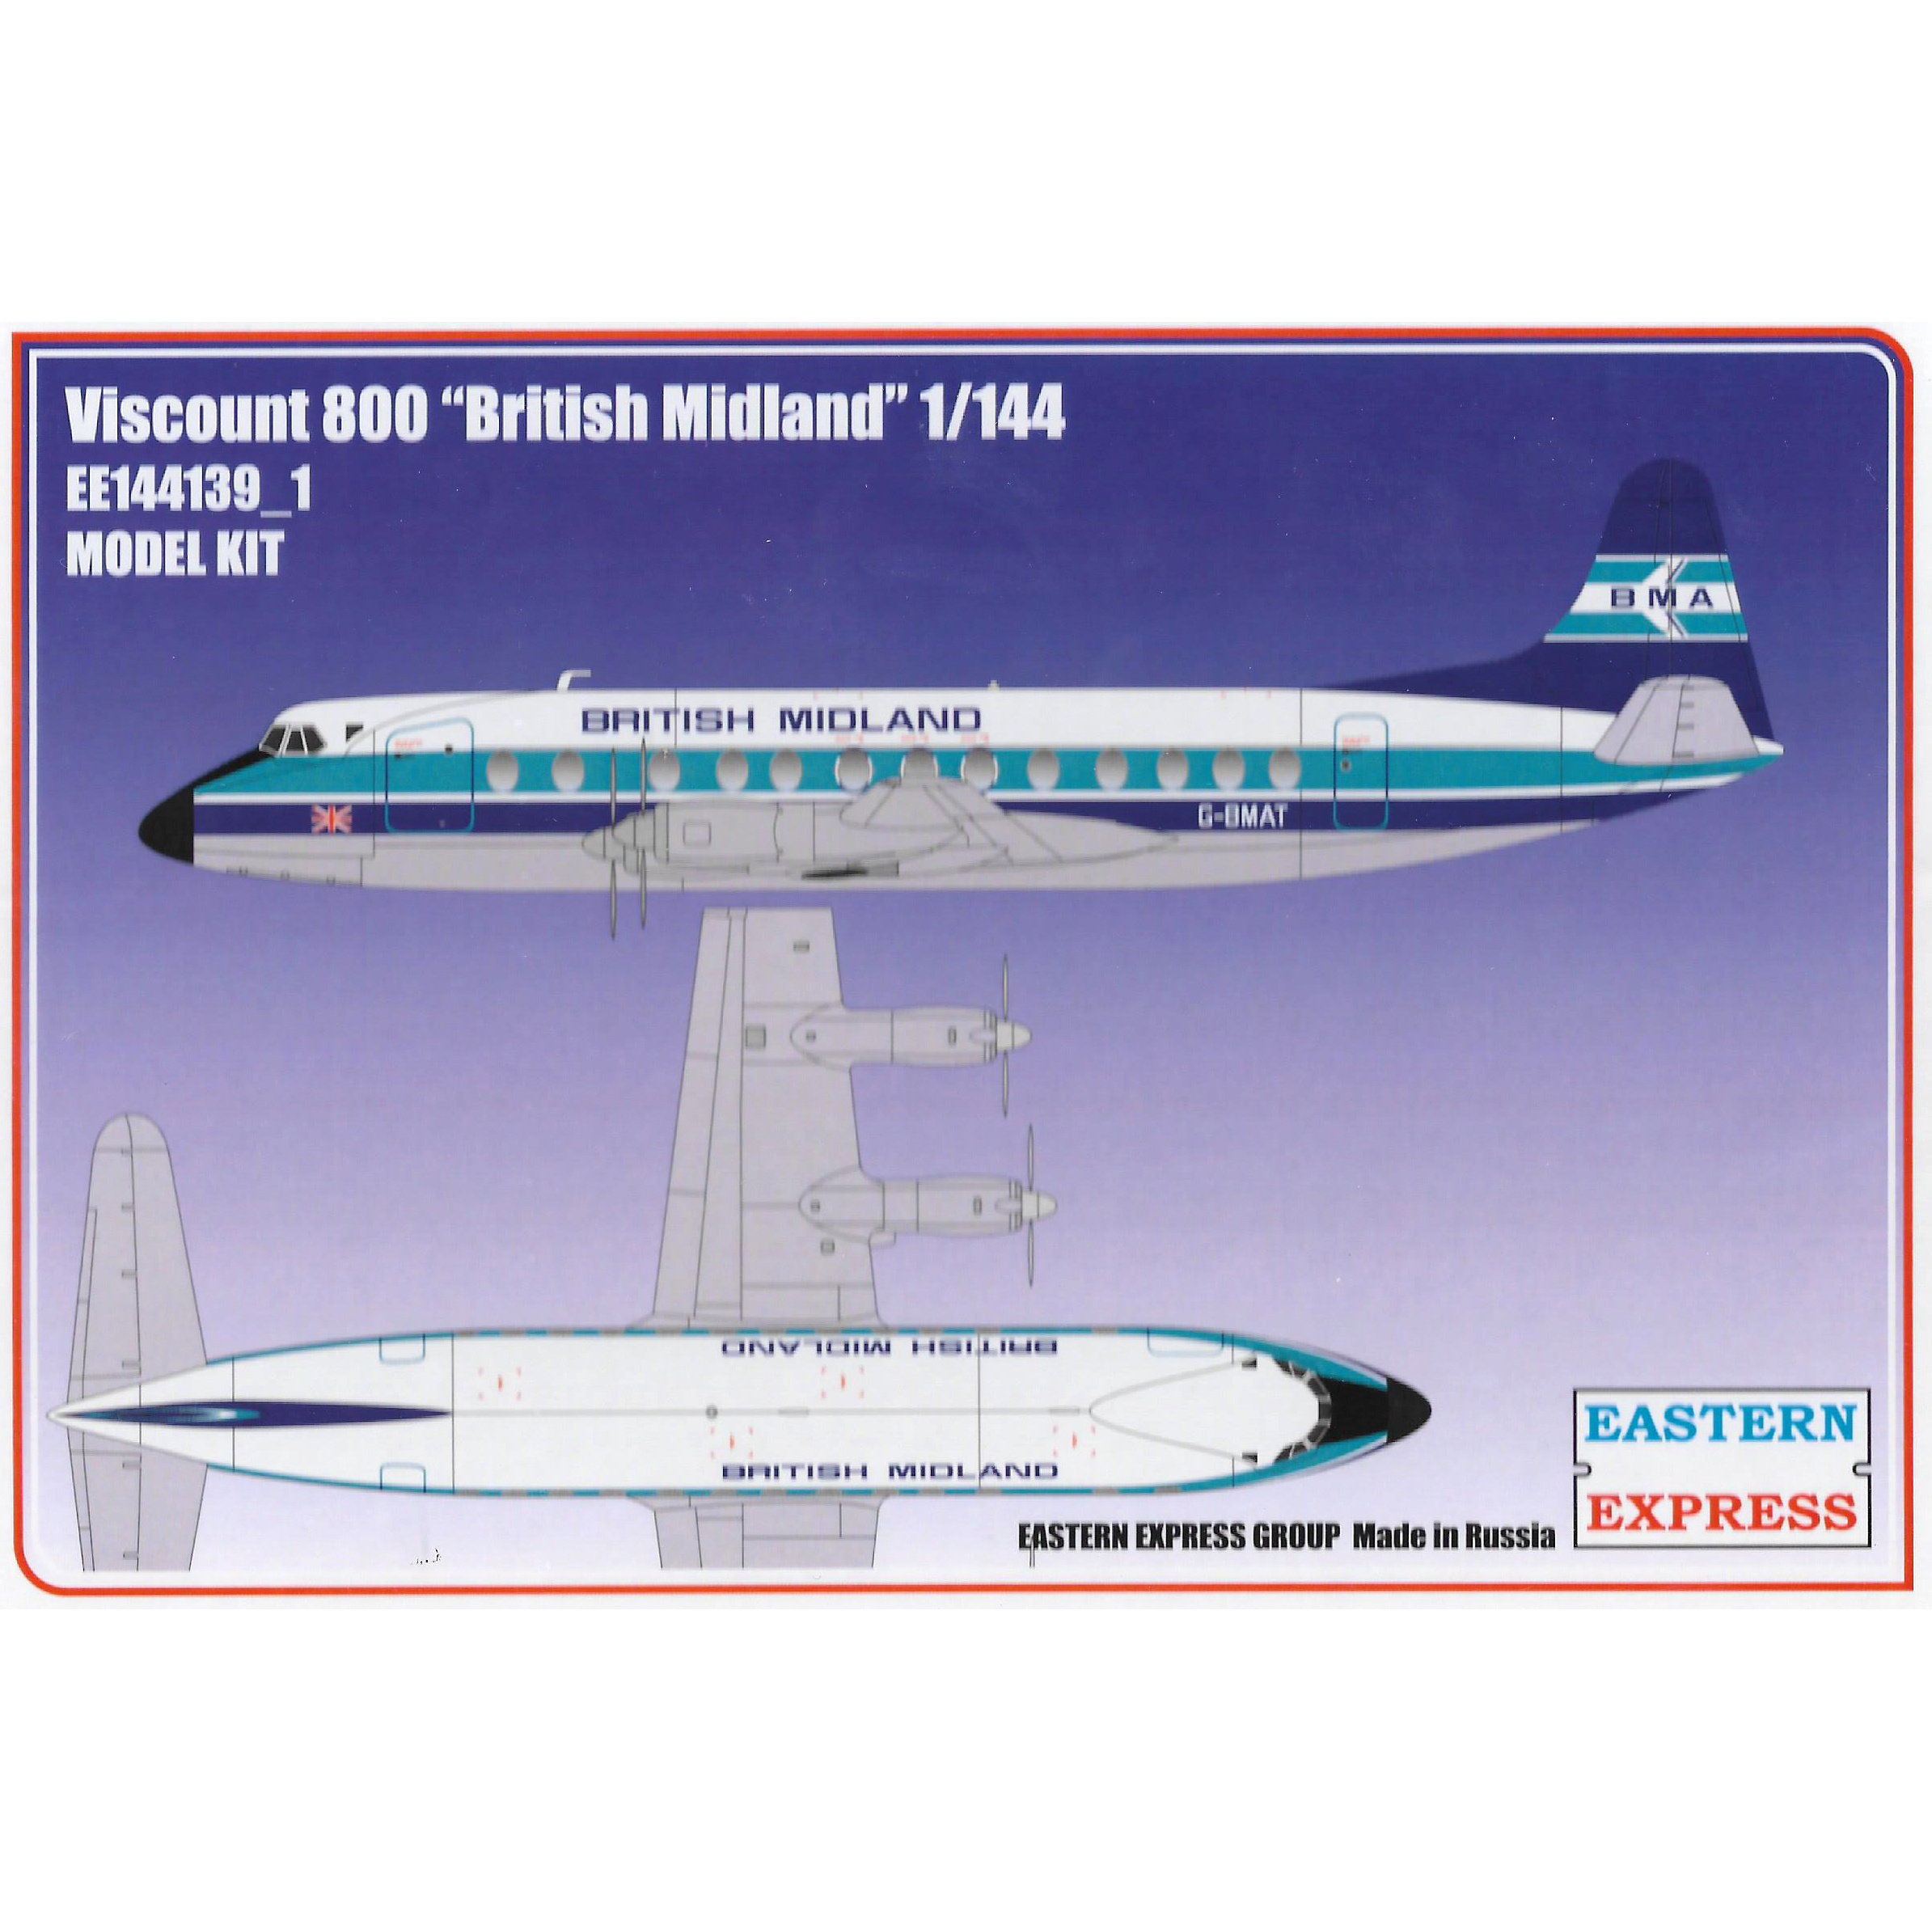 144139-1 Orient Express 1/144 Viscount 800 British Midland Aircraft